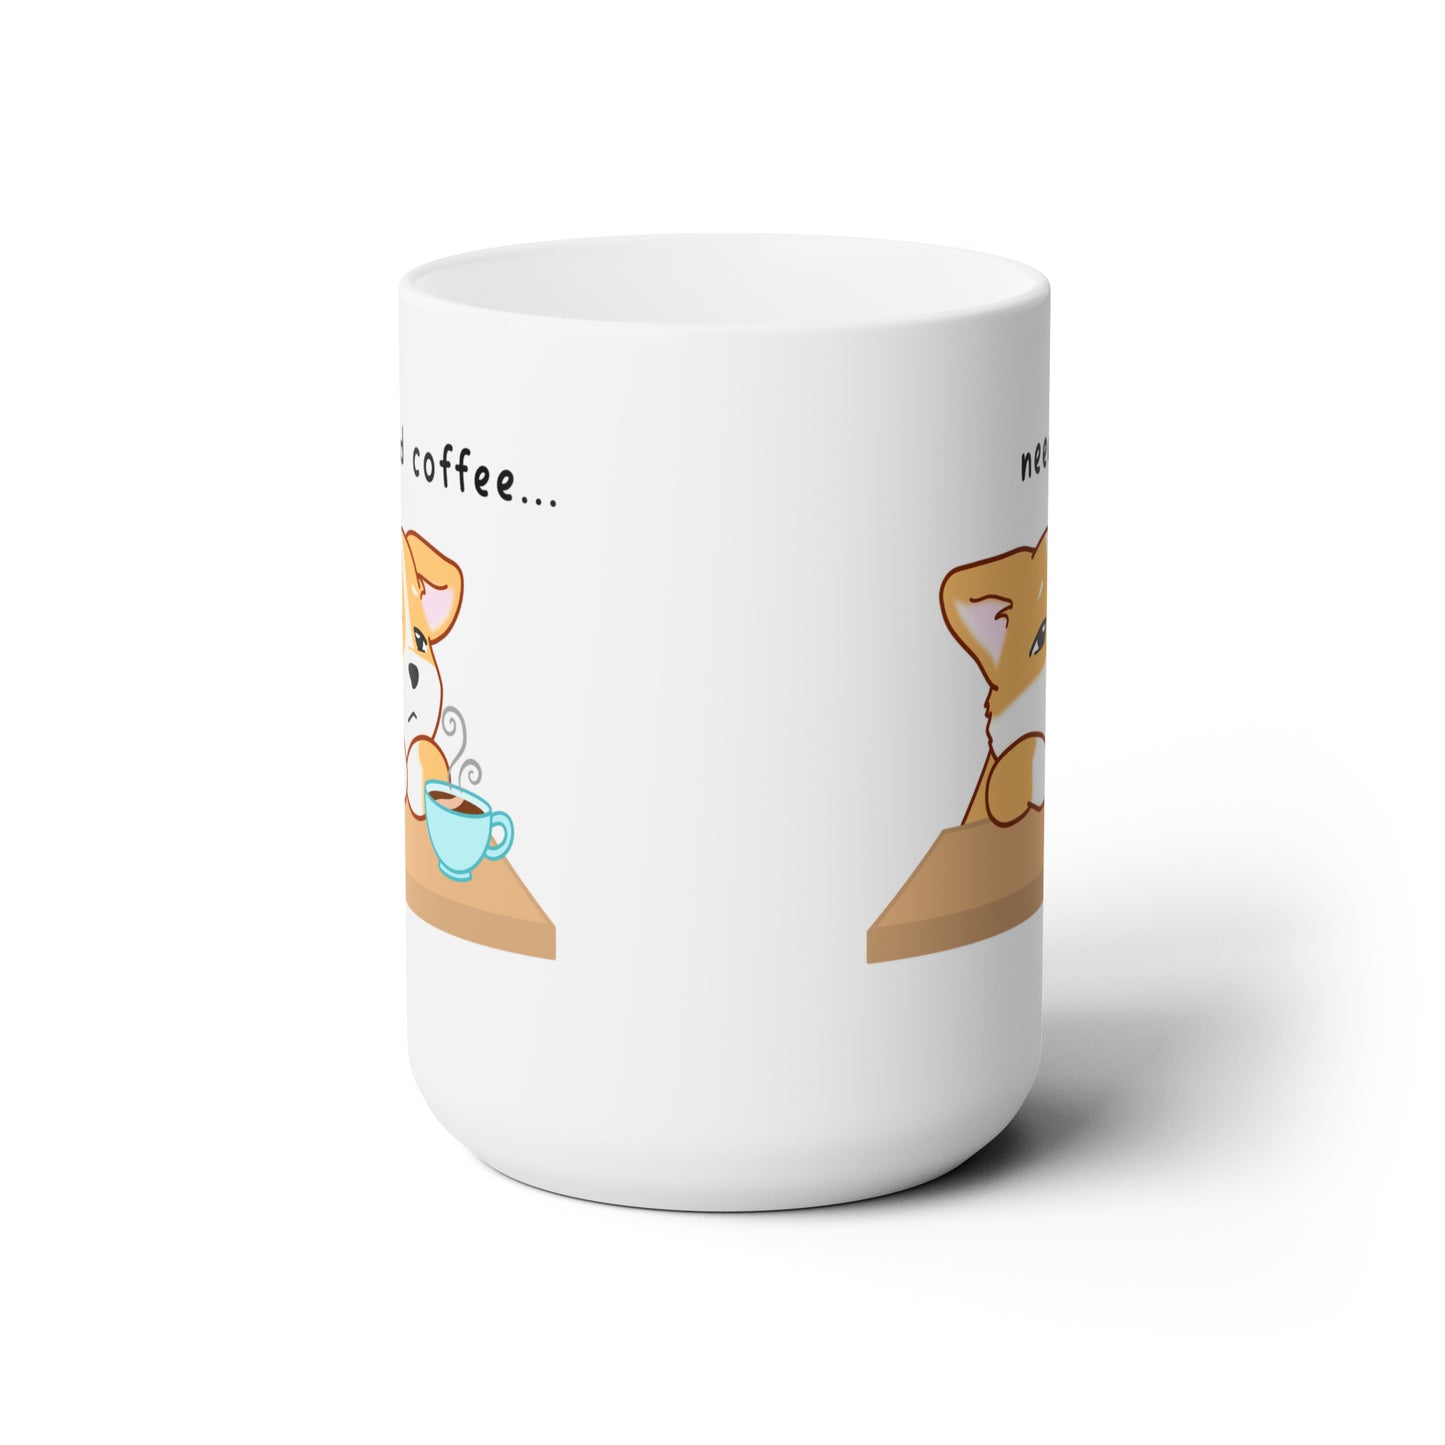 Corgi - Need Coffee - Large Single image - Ceramic Mug 15oz